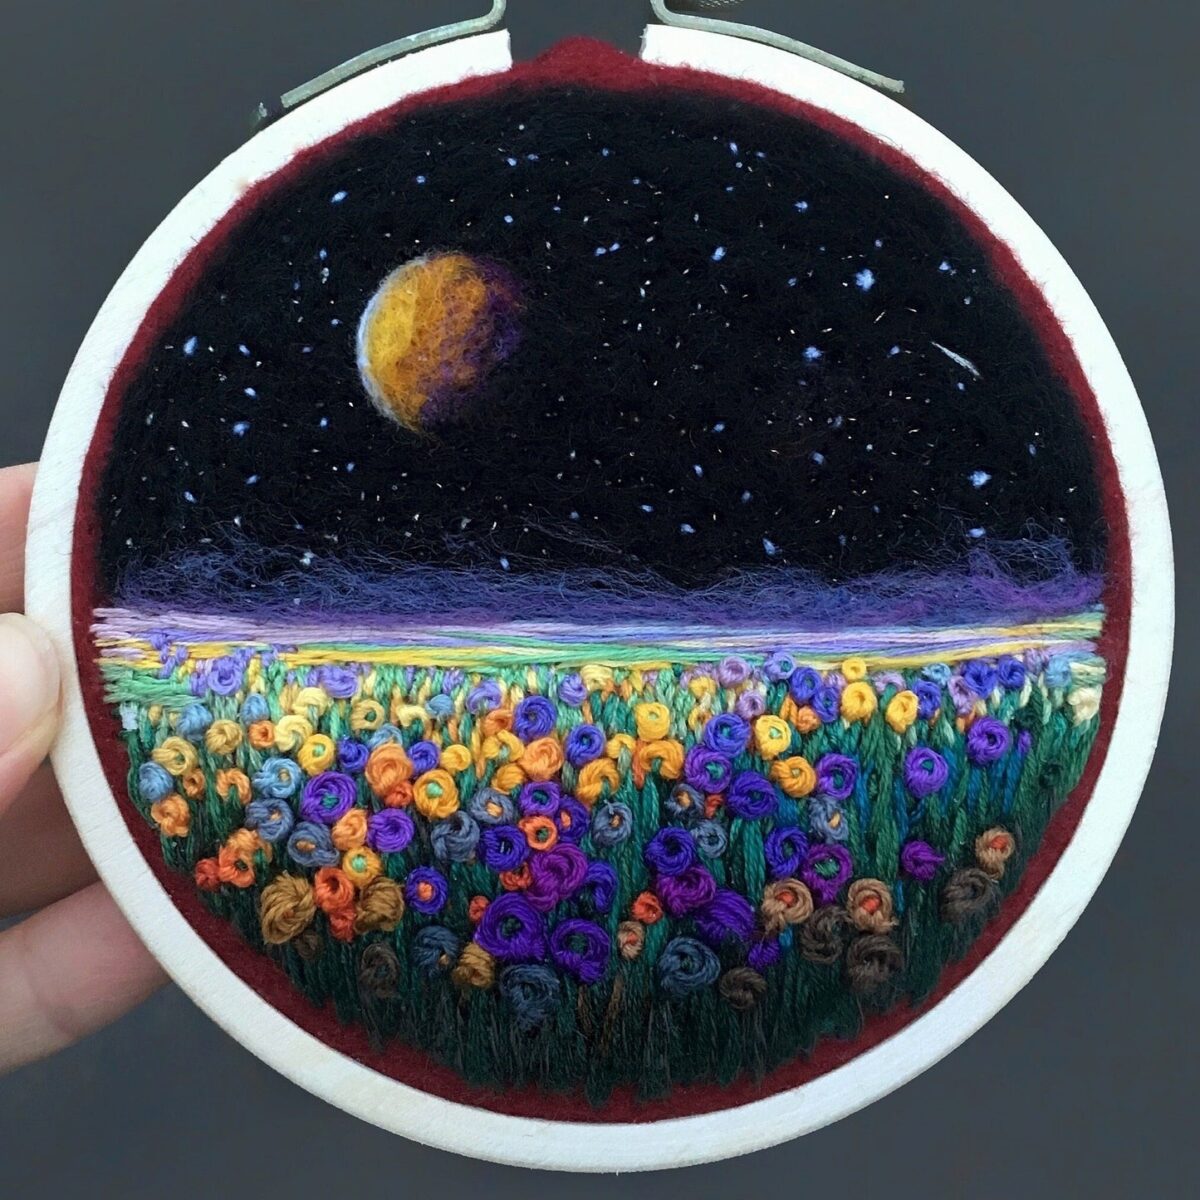 Lush Night Sky Landscape Needle Felted And Embroidered Art Hoops By Yuliya Krishchik 8